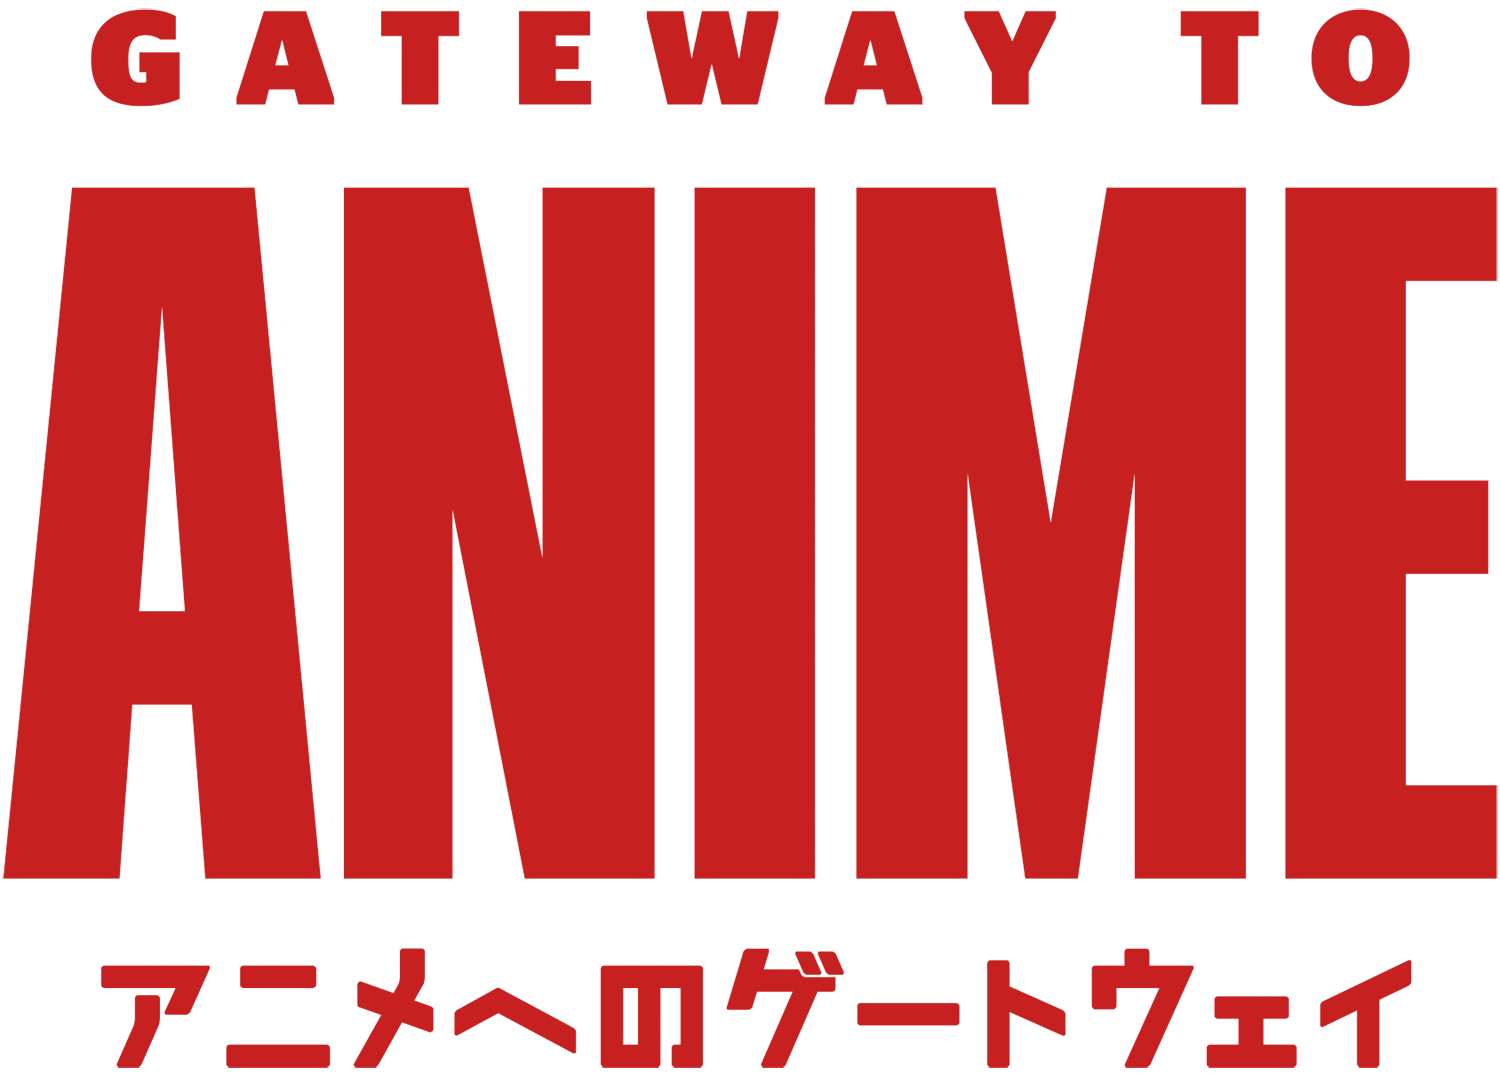 Gateway to Anime